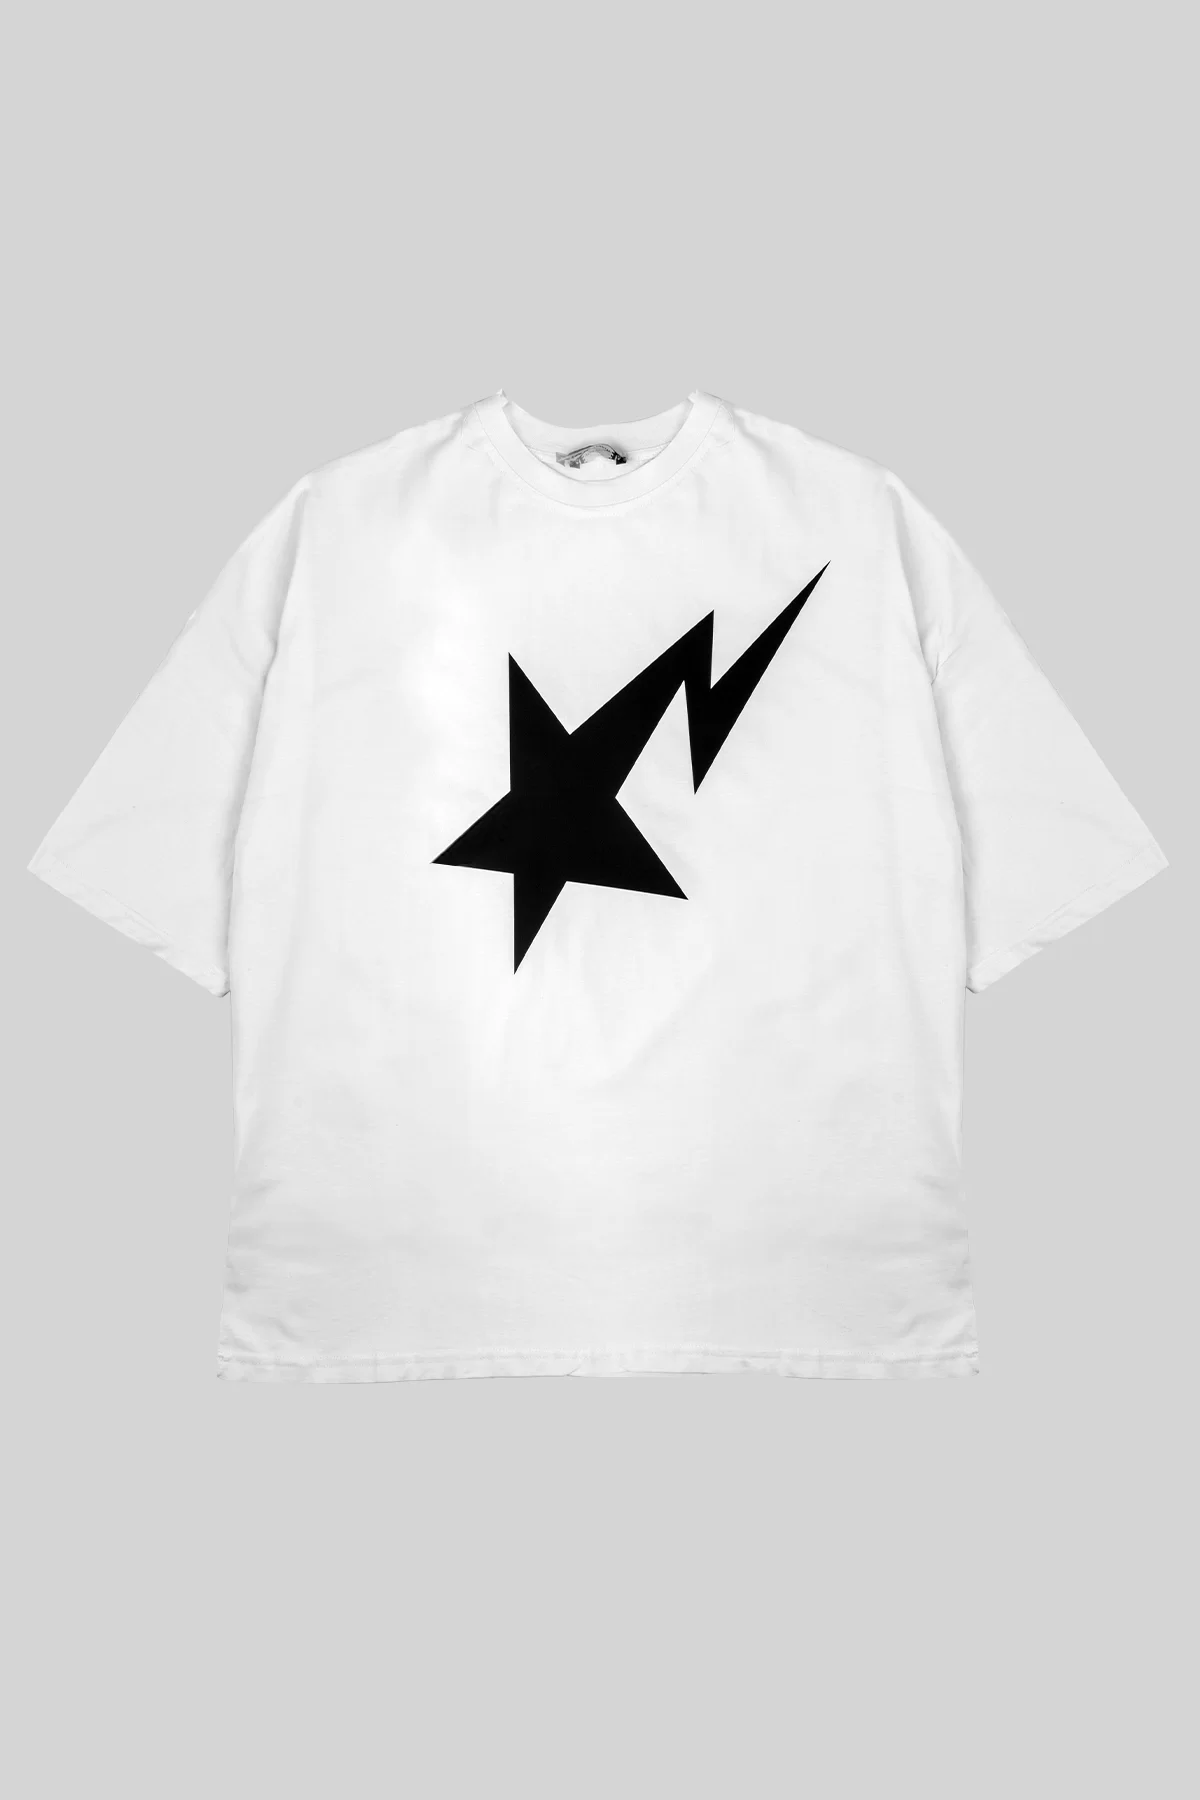 Falling Star Oversize Unisex Beyaz Tshirt